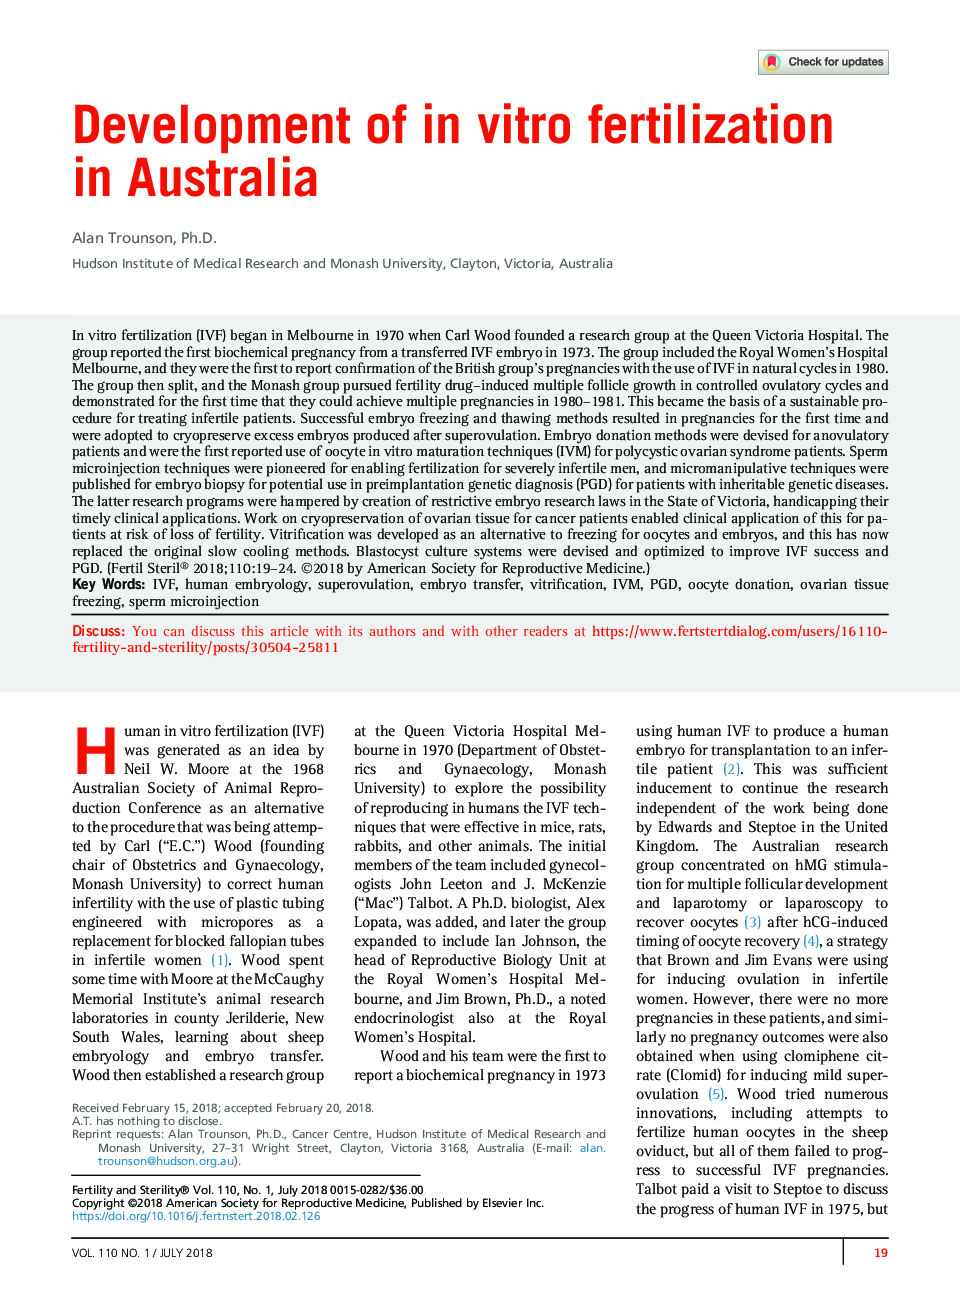 Development of inÂ vitro fertilization in Australia